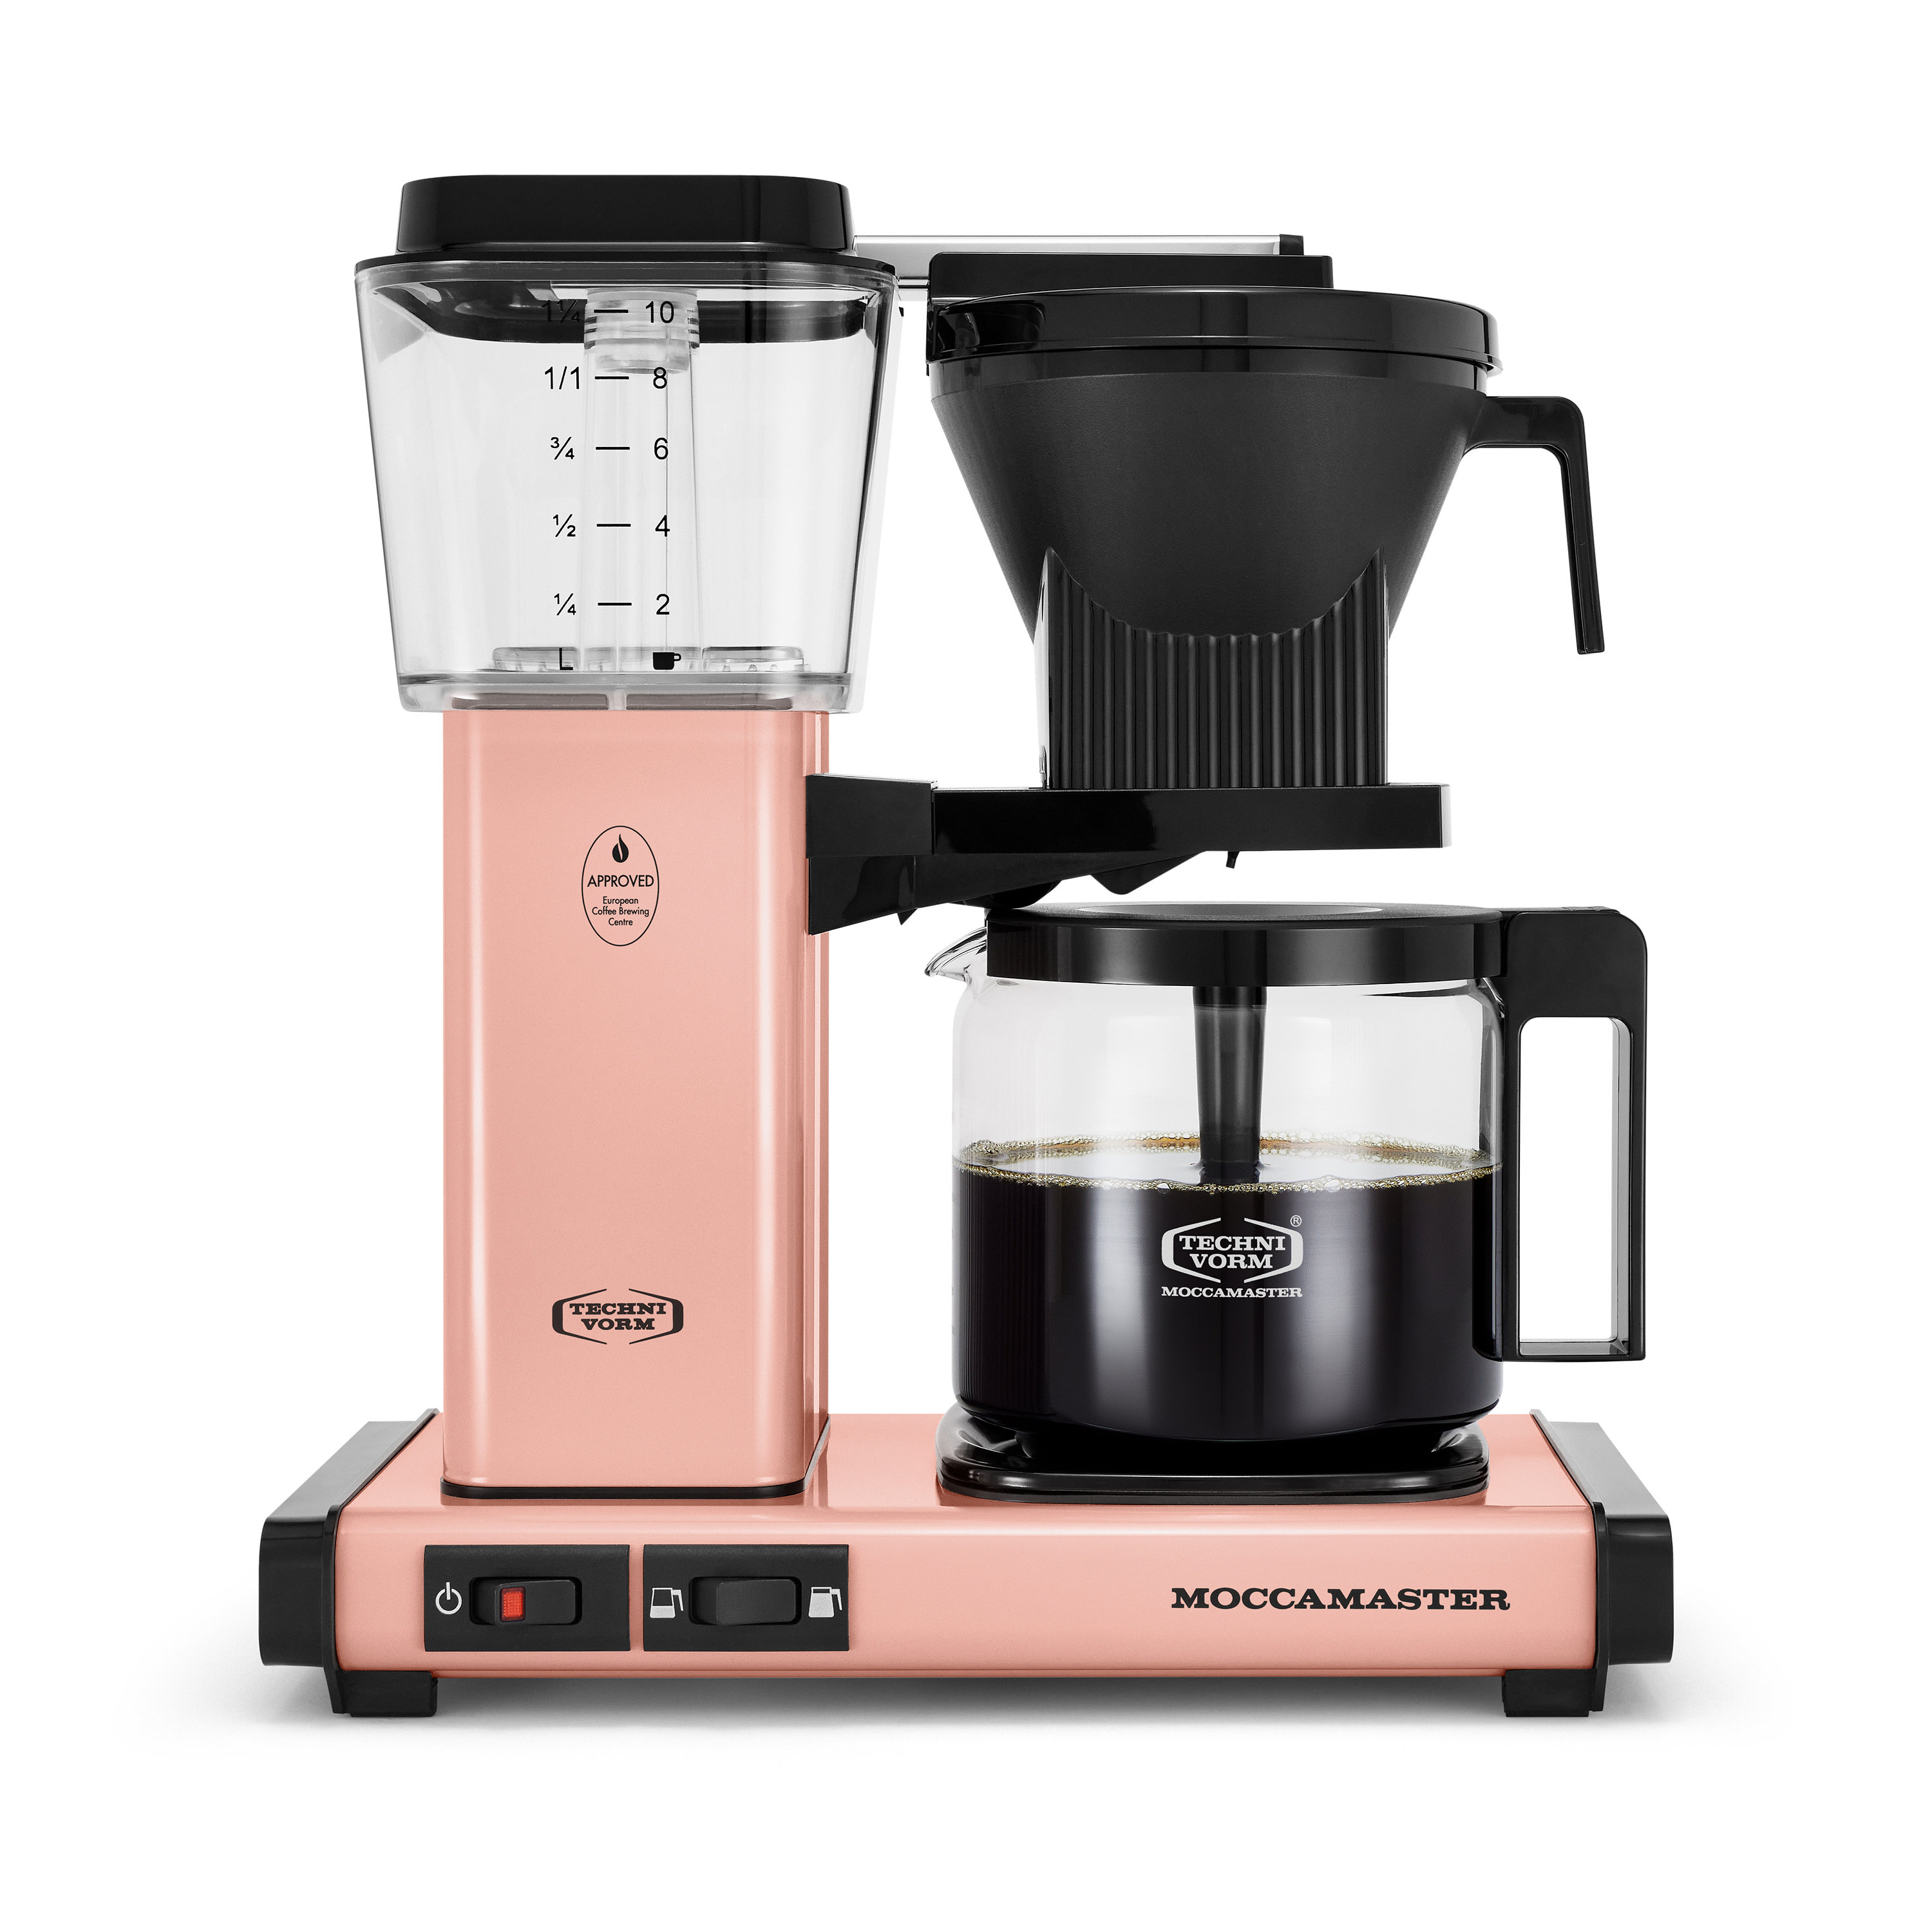 Krups Coffee Maker w/ Grinder - appliances - by owner - sale